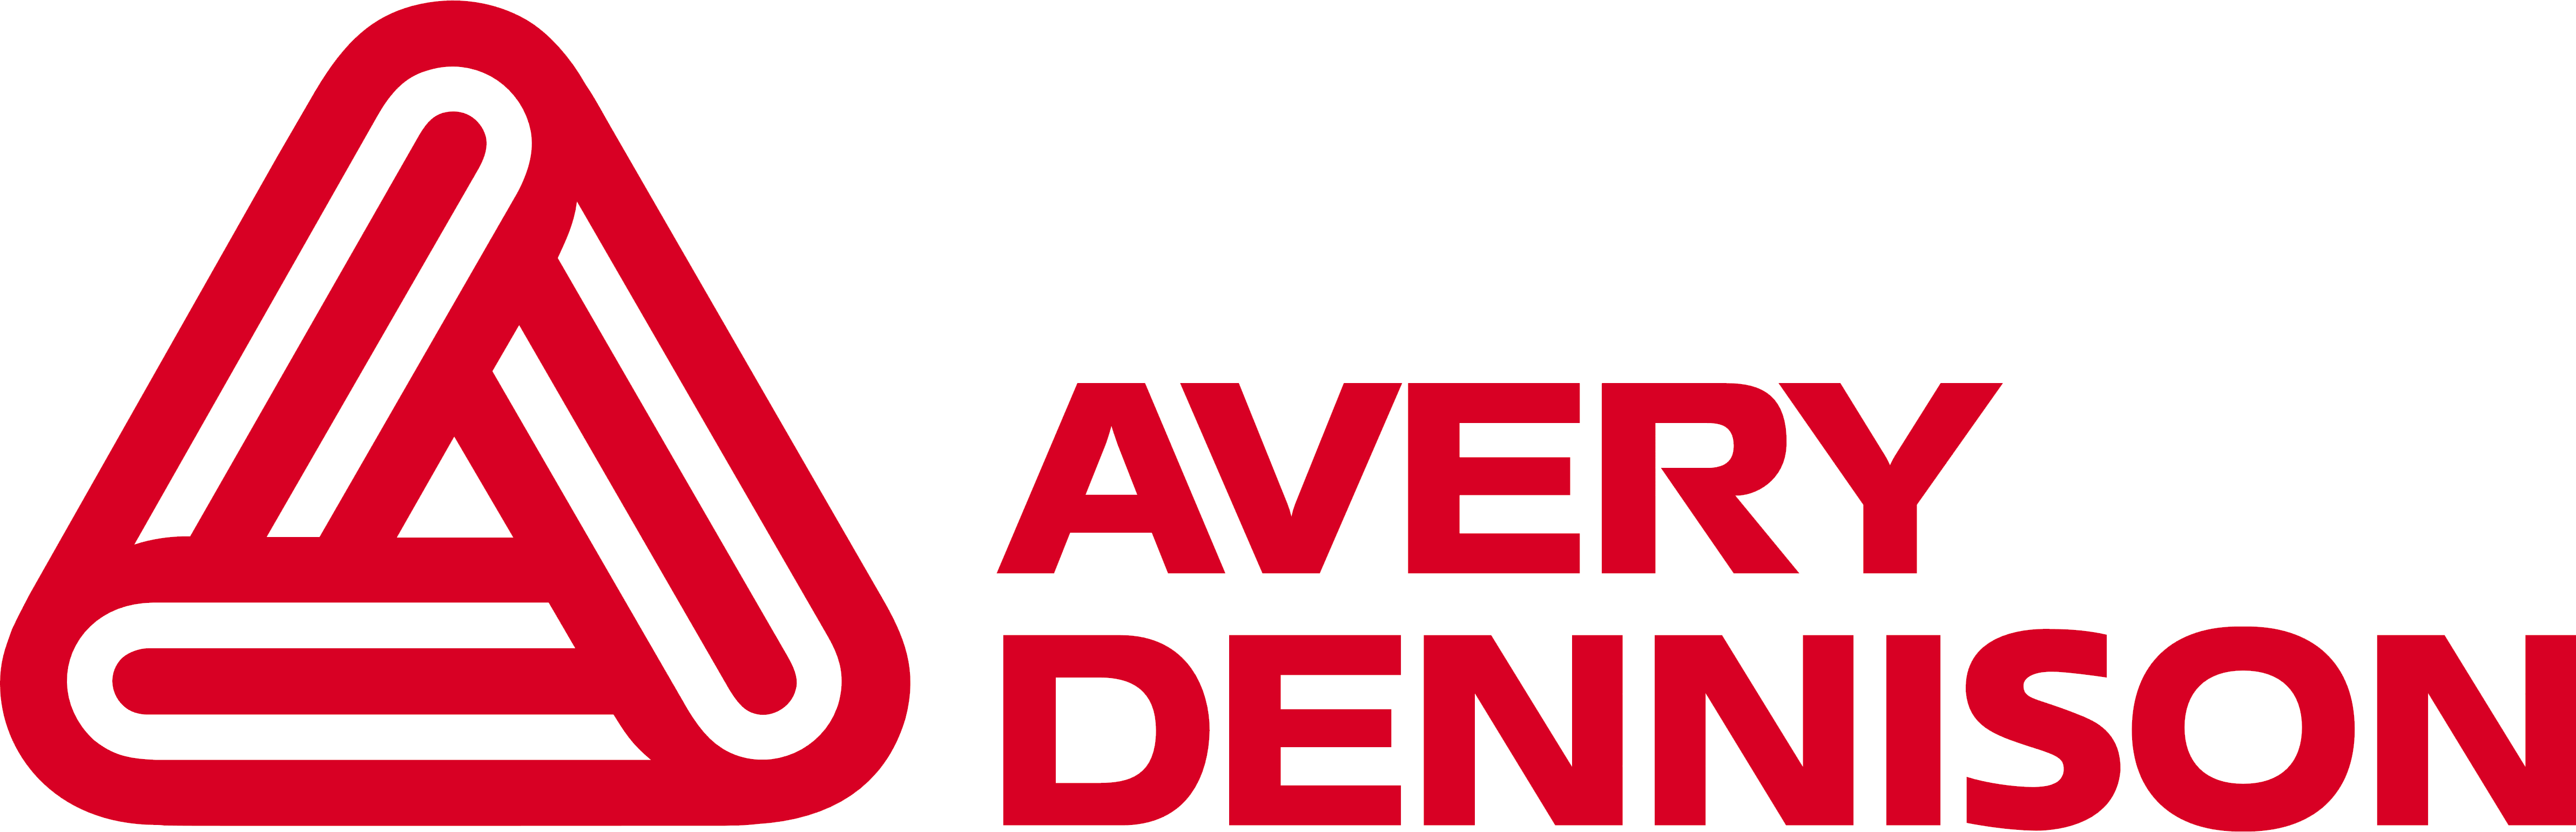 Avery Dennison – Logos Download